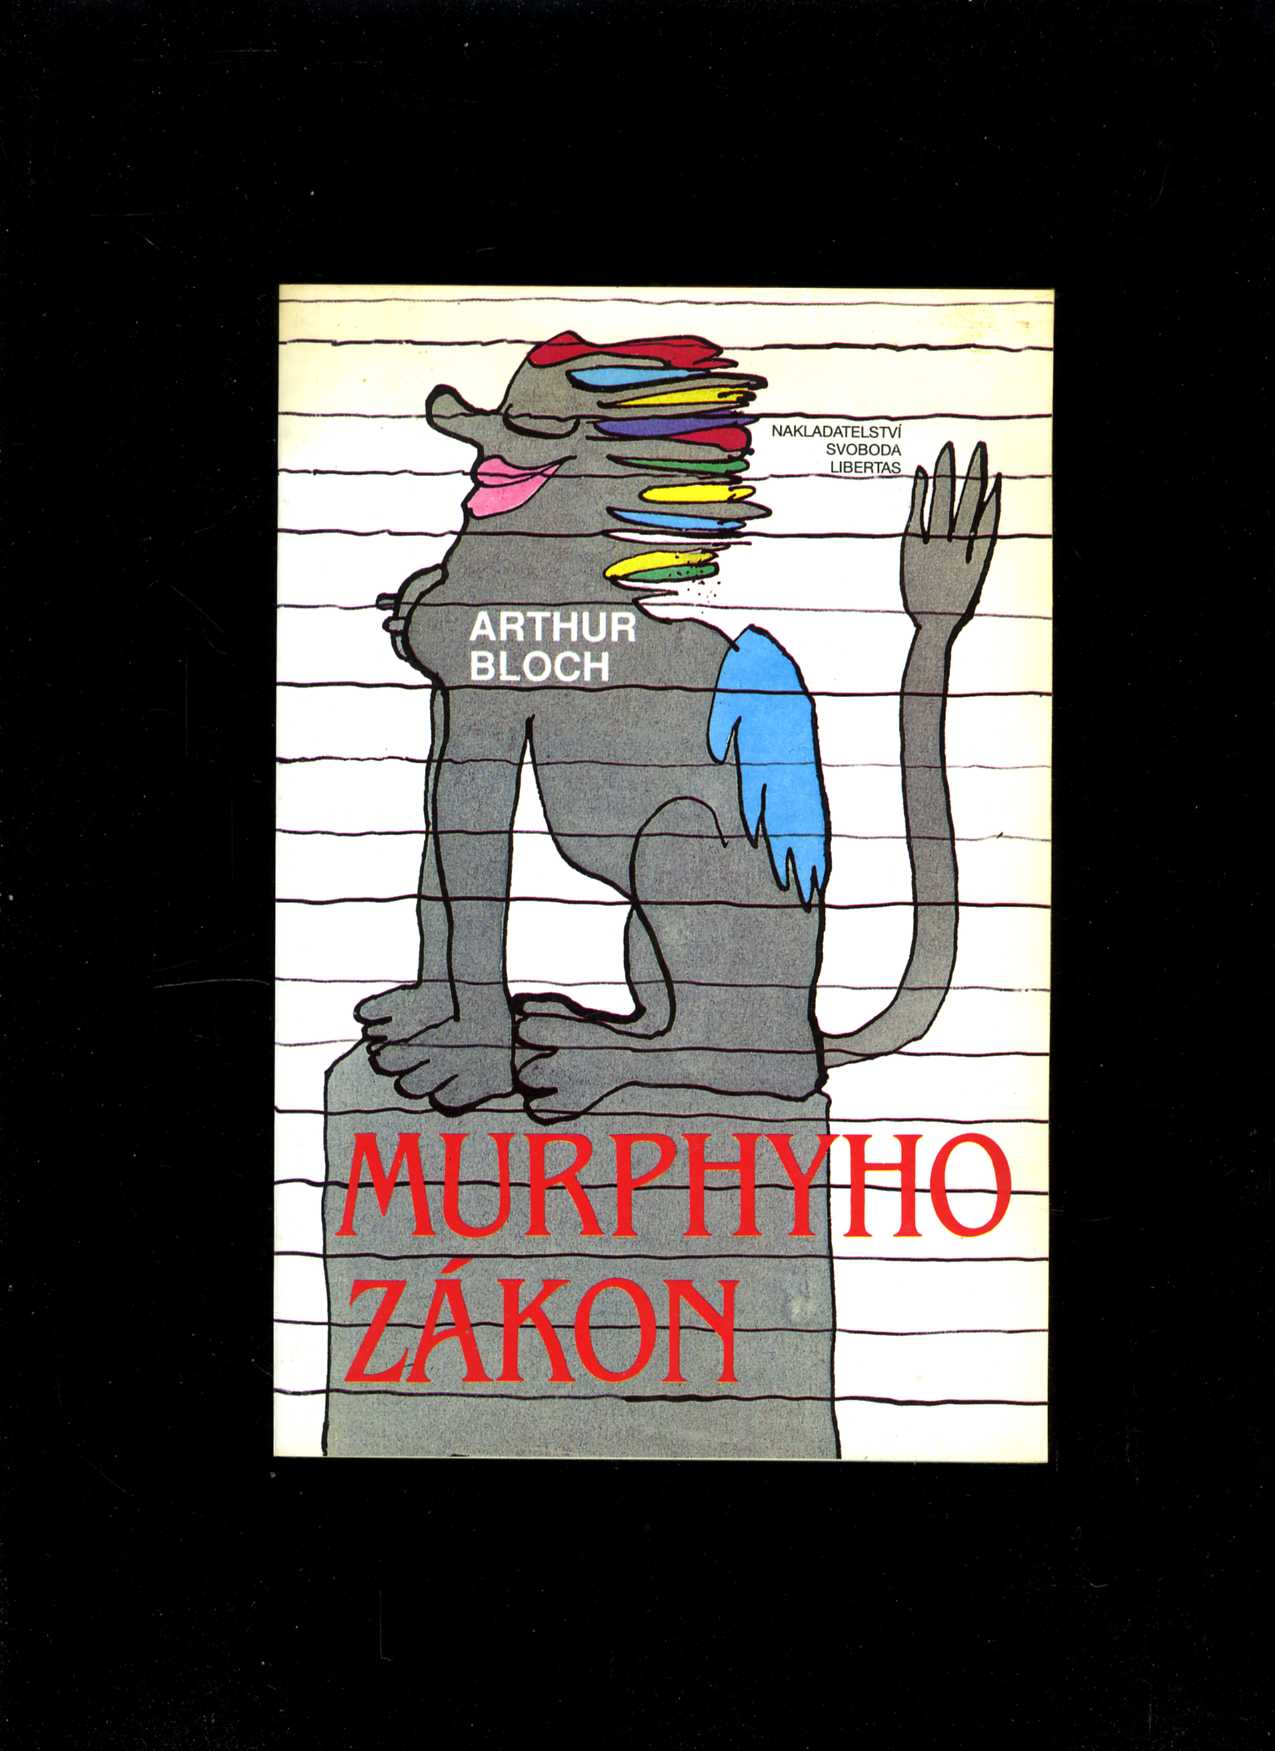 Murphyho zákon (Arthur Bloch)